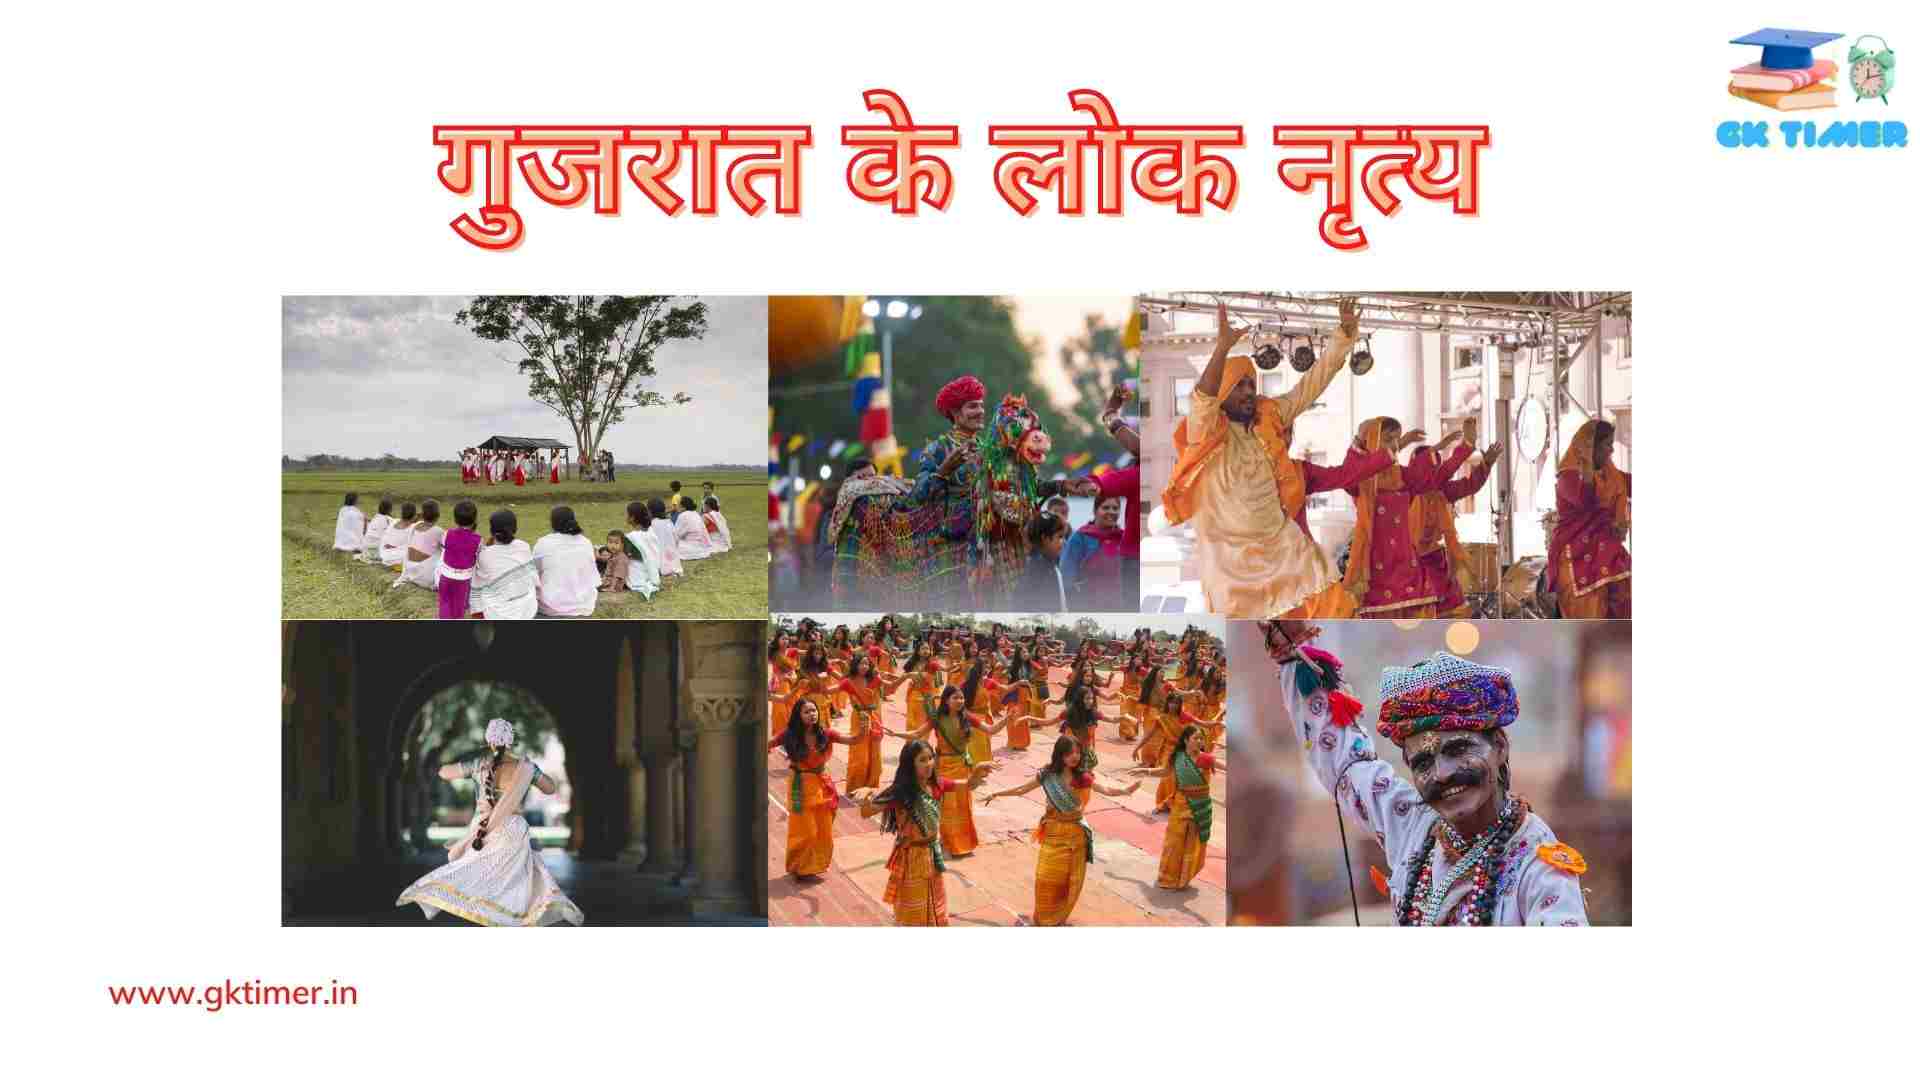 गुजरात के लोकप्रिय लोक नृत्य(भवई, डांडिया, गरबा, पधार, टिप्पनी) | Popular folk dances of Gujarat in Hindi